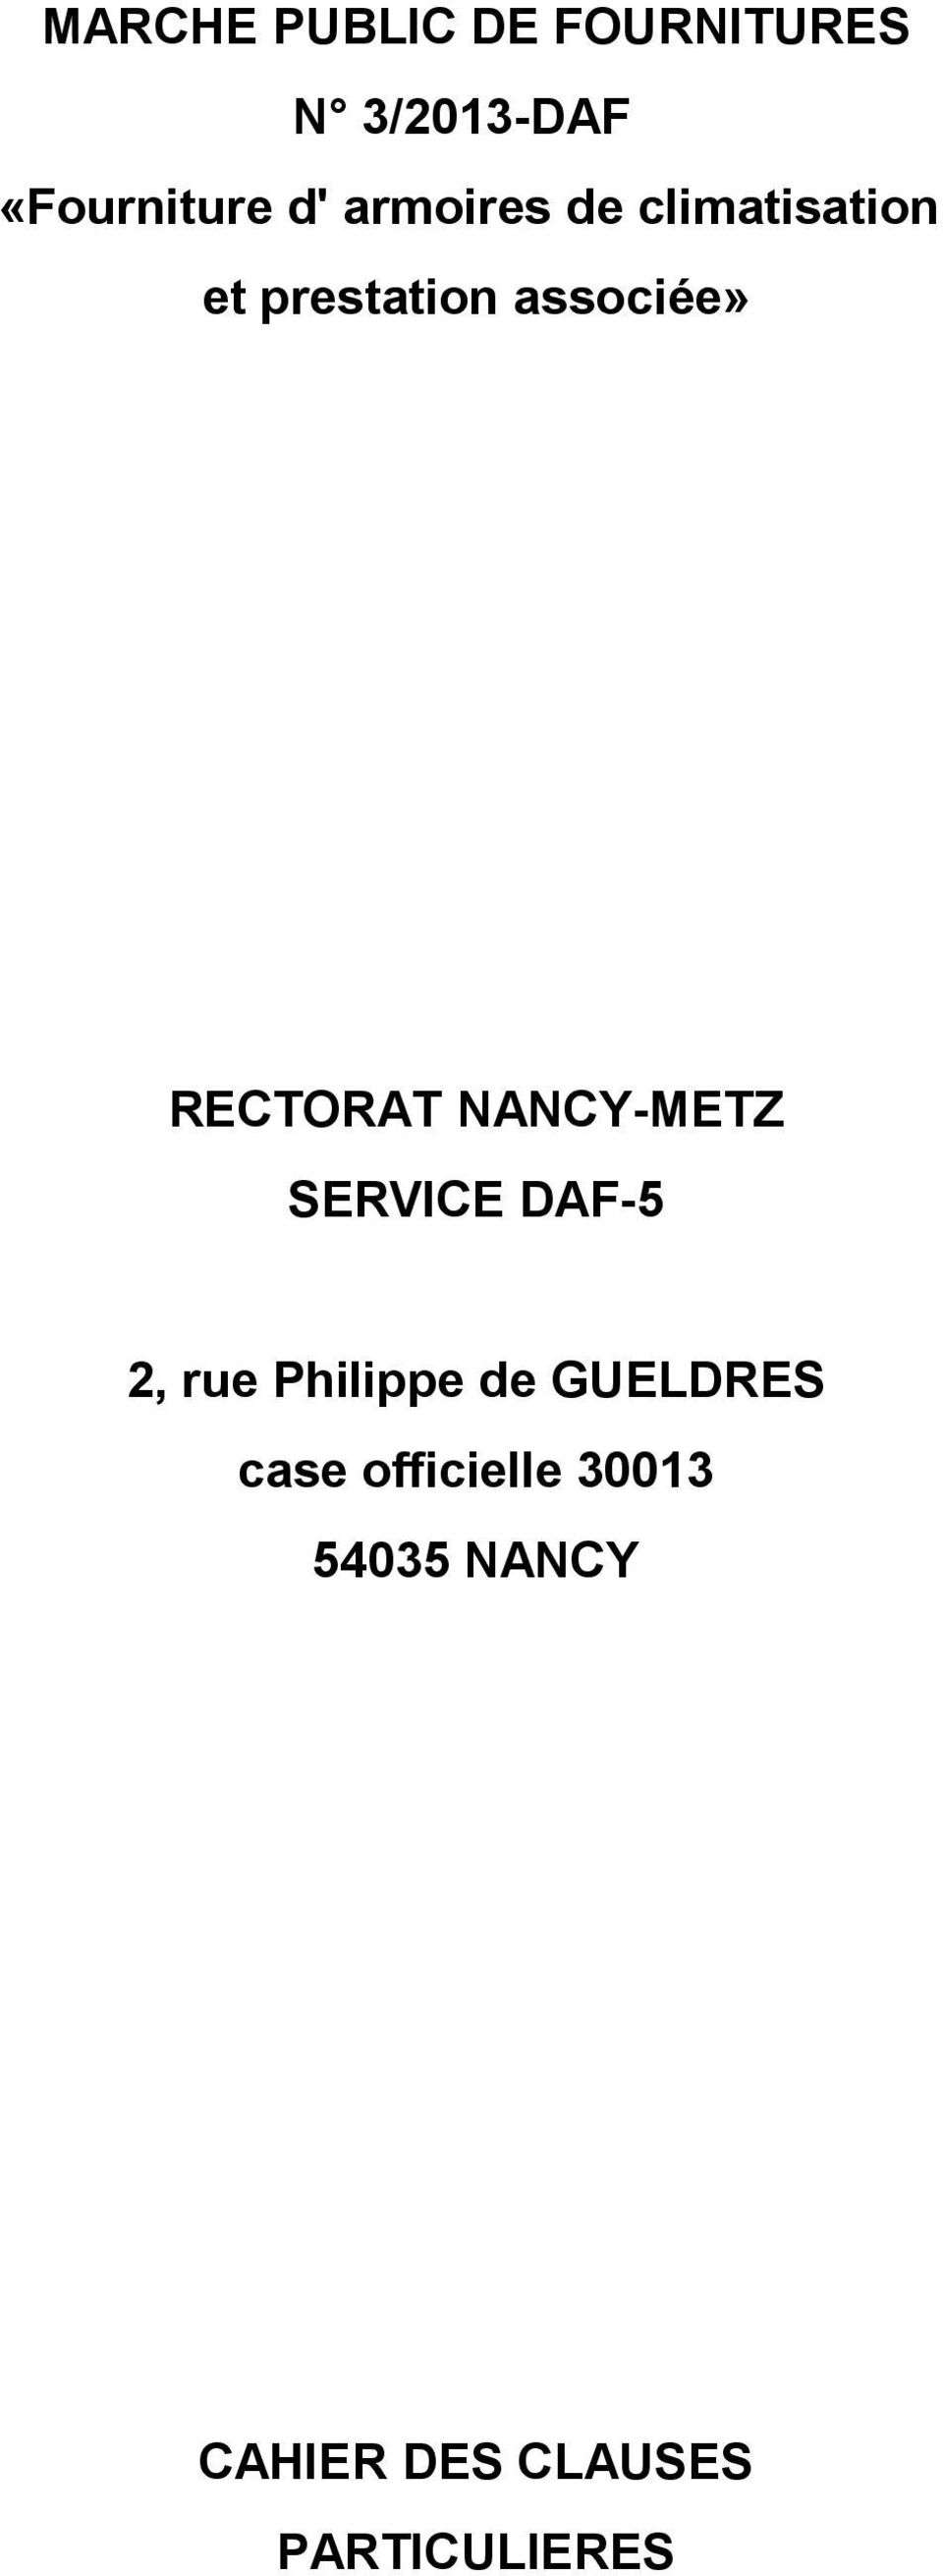 NANCY-METZ SERVICE DAF-5 2, rue Philippe de GUELDRES case